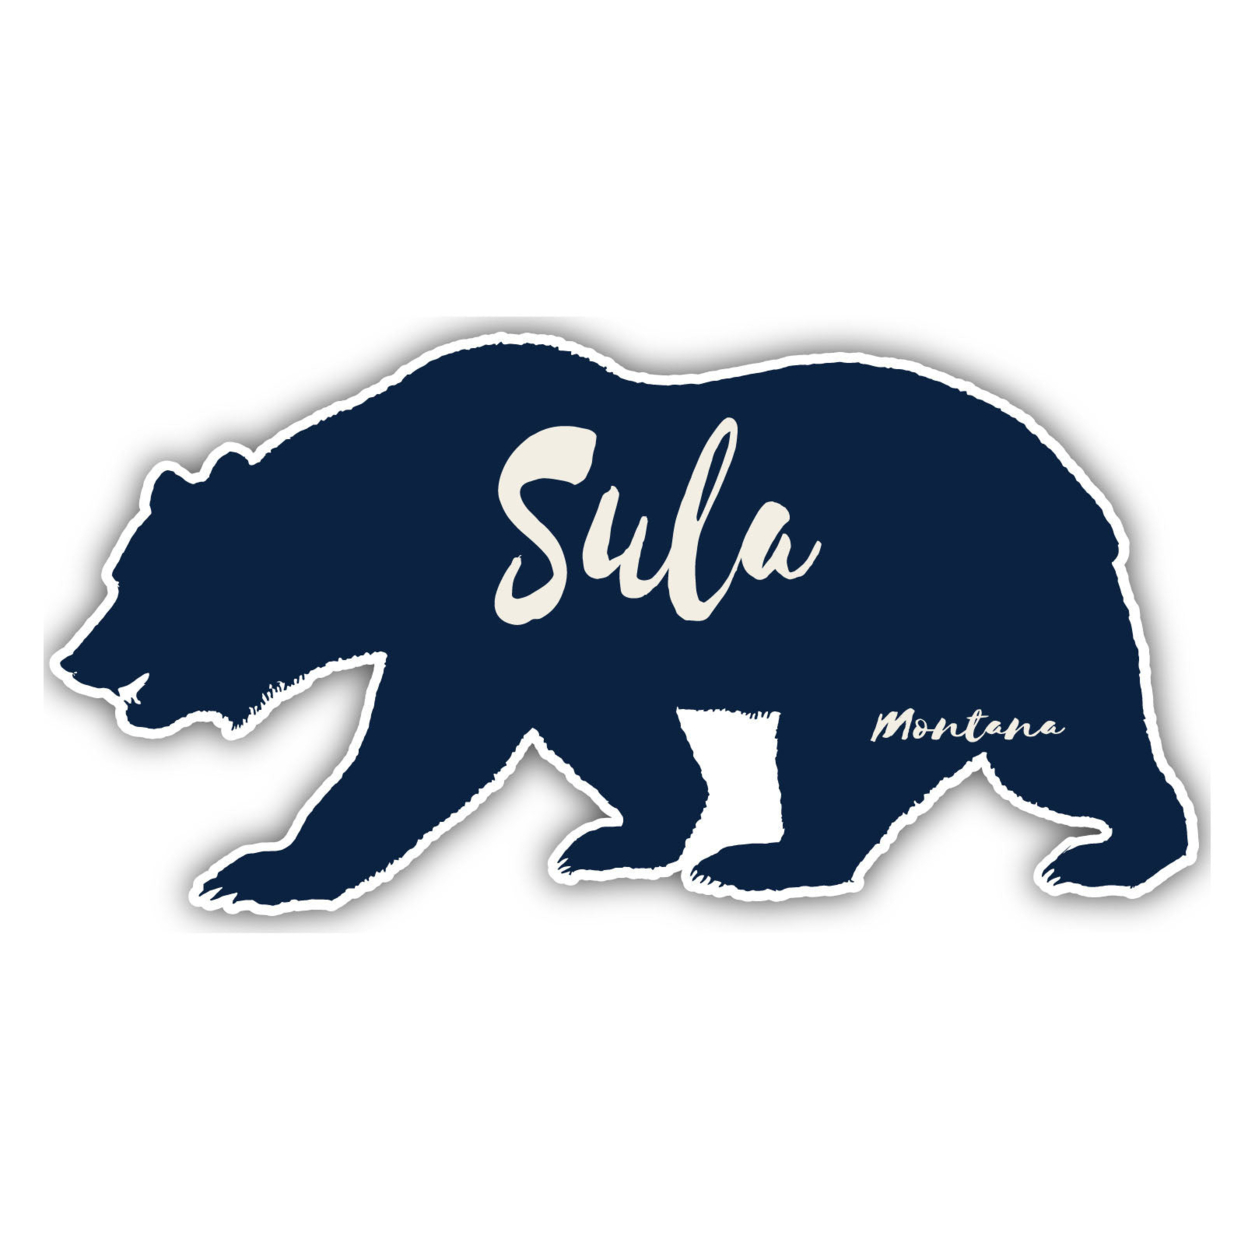 Sula Montana Souvenir Decorative Stickers (Choose Theme And Size) - Single Unit, 4-Inch, Bear